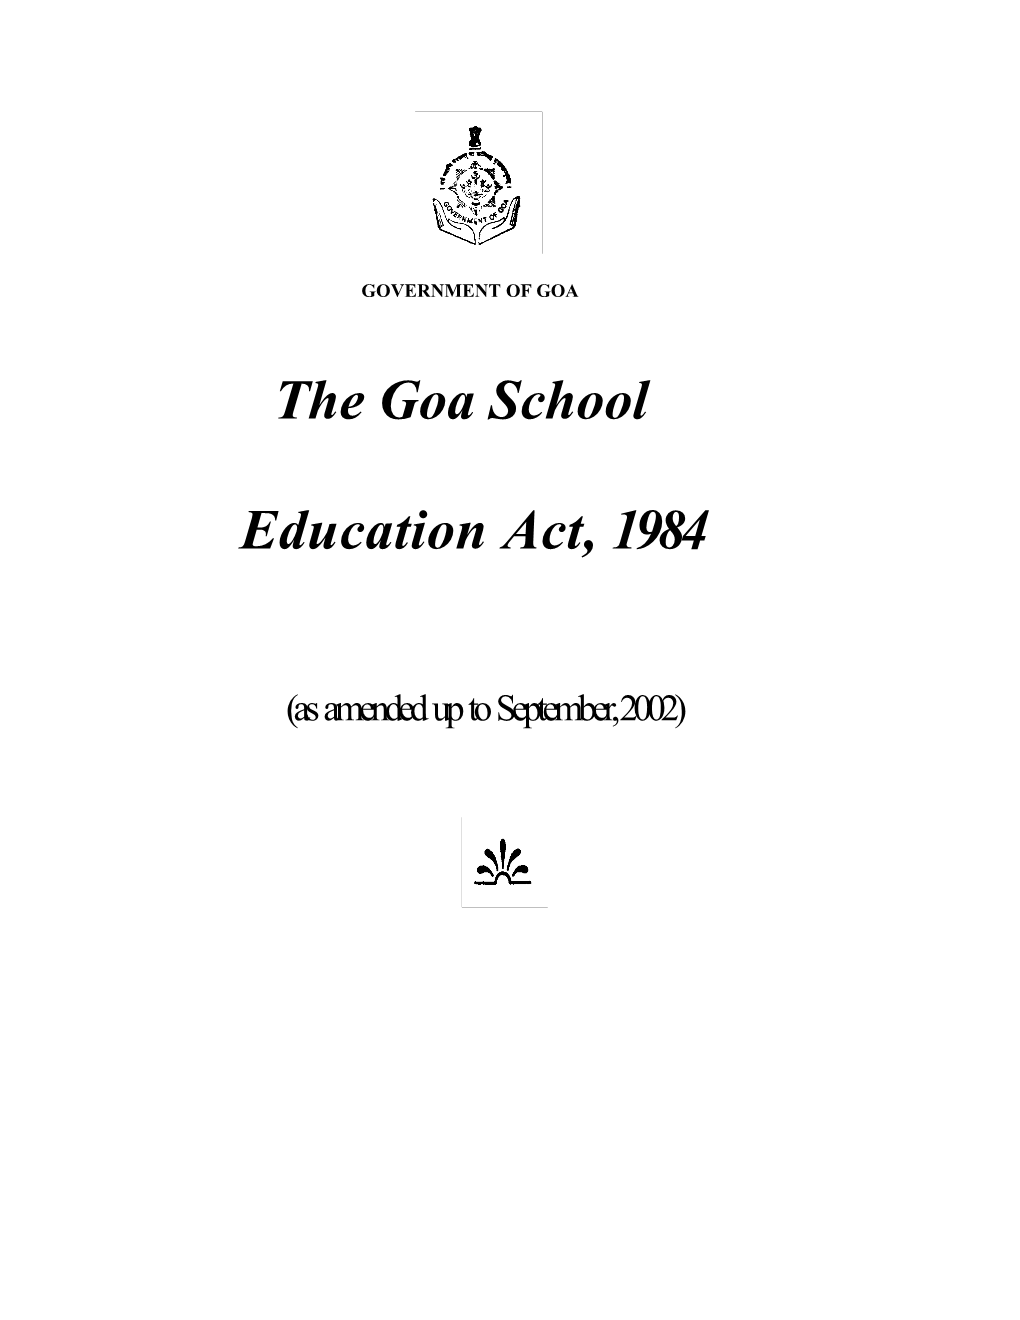 The Goa School Education Act, 1984